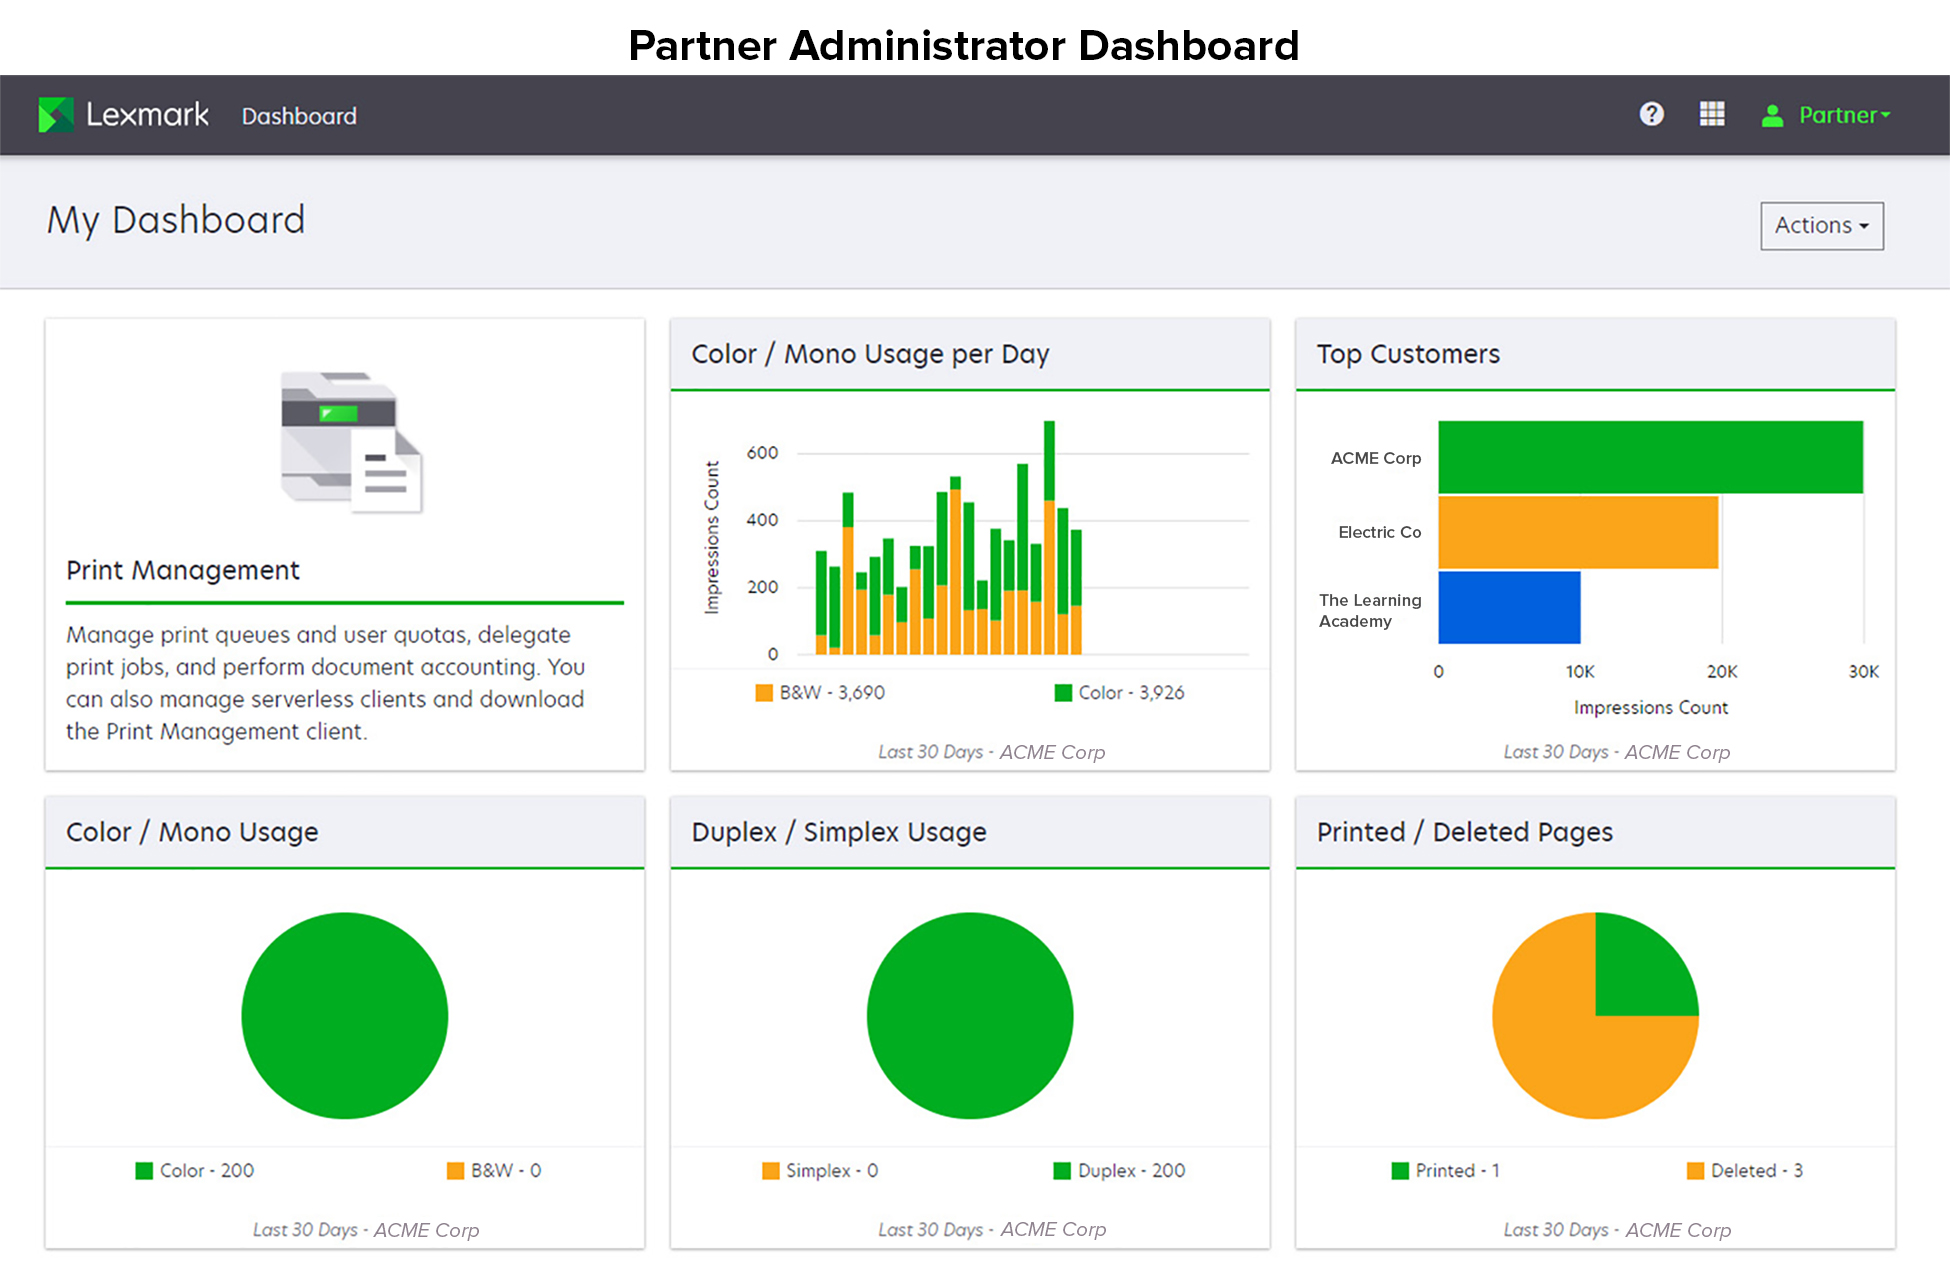  A screenshot showing the partner administrator dashboard.